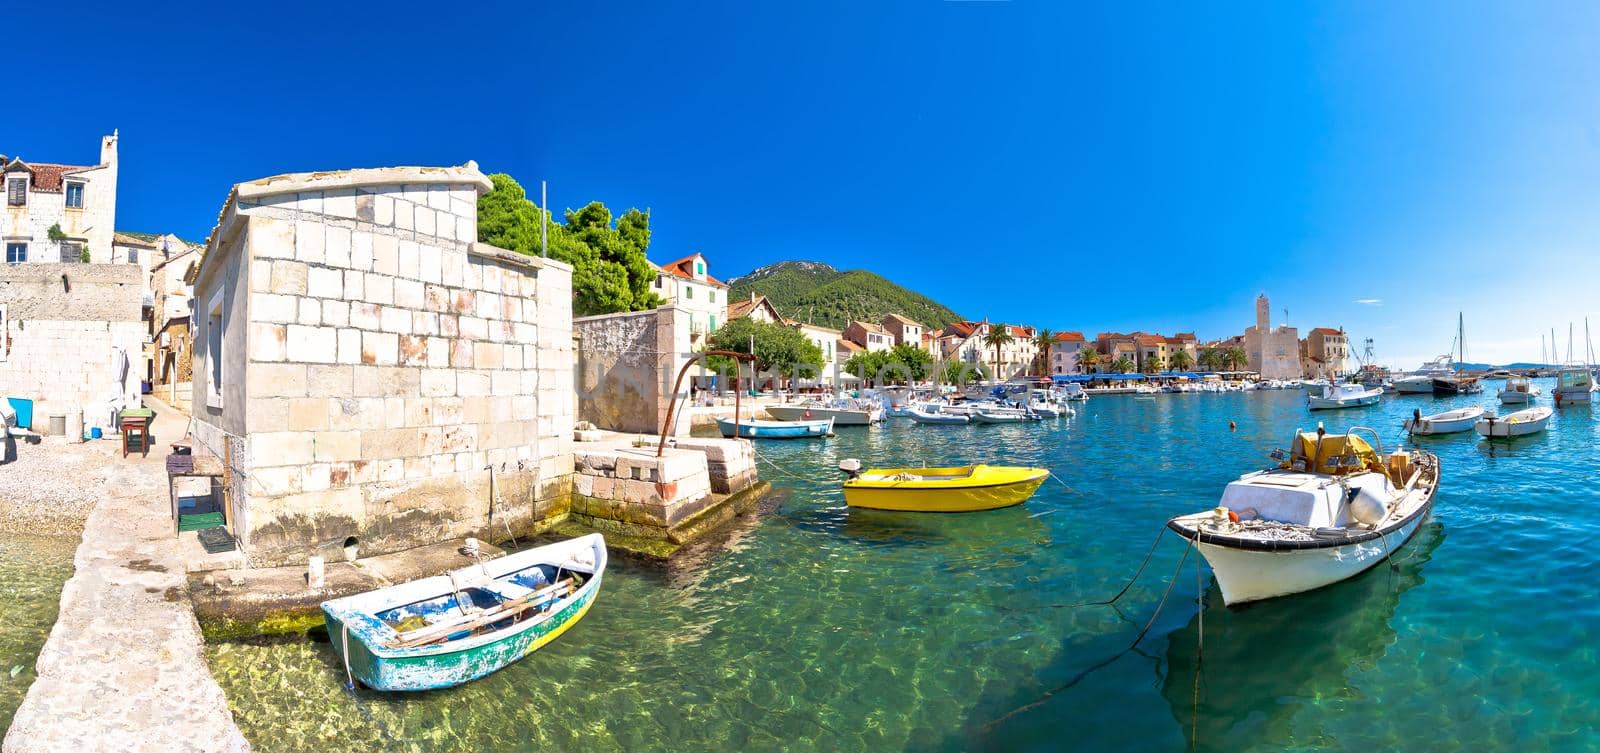 Town of Komiza on Vis island scenic waterfront panoramic view, Dalmatia archipelago of Croatia